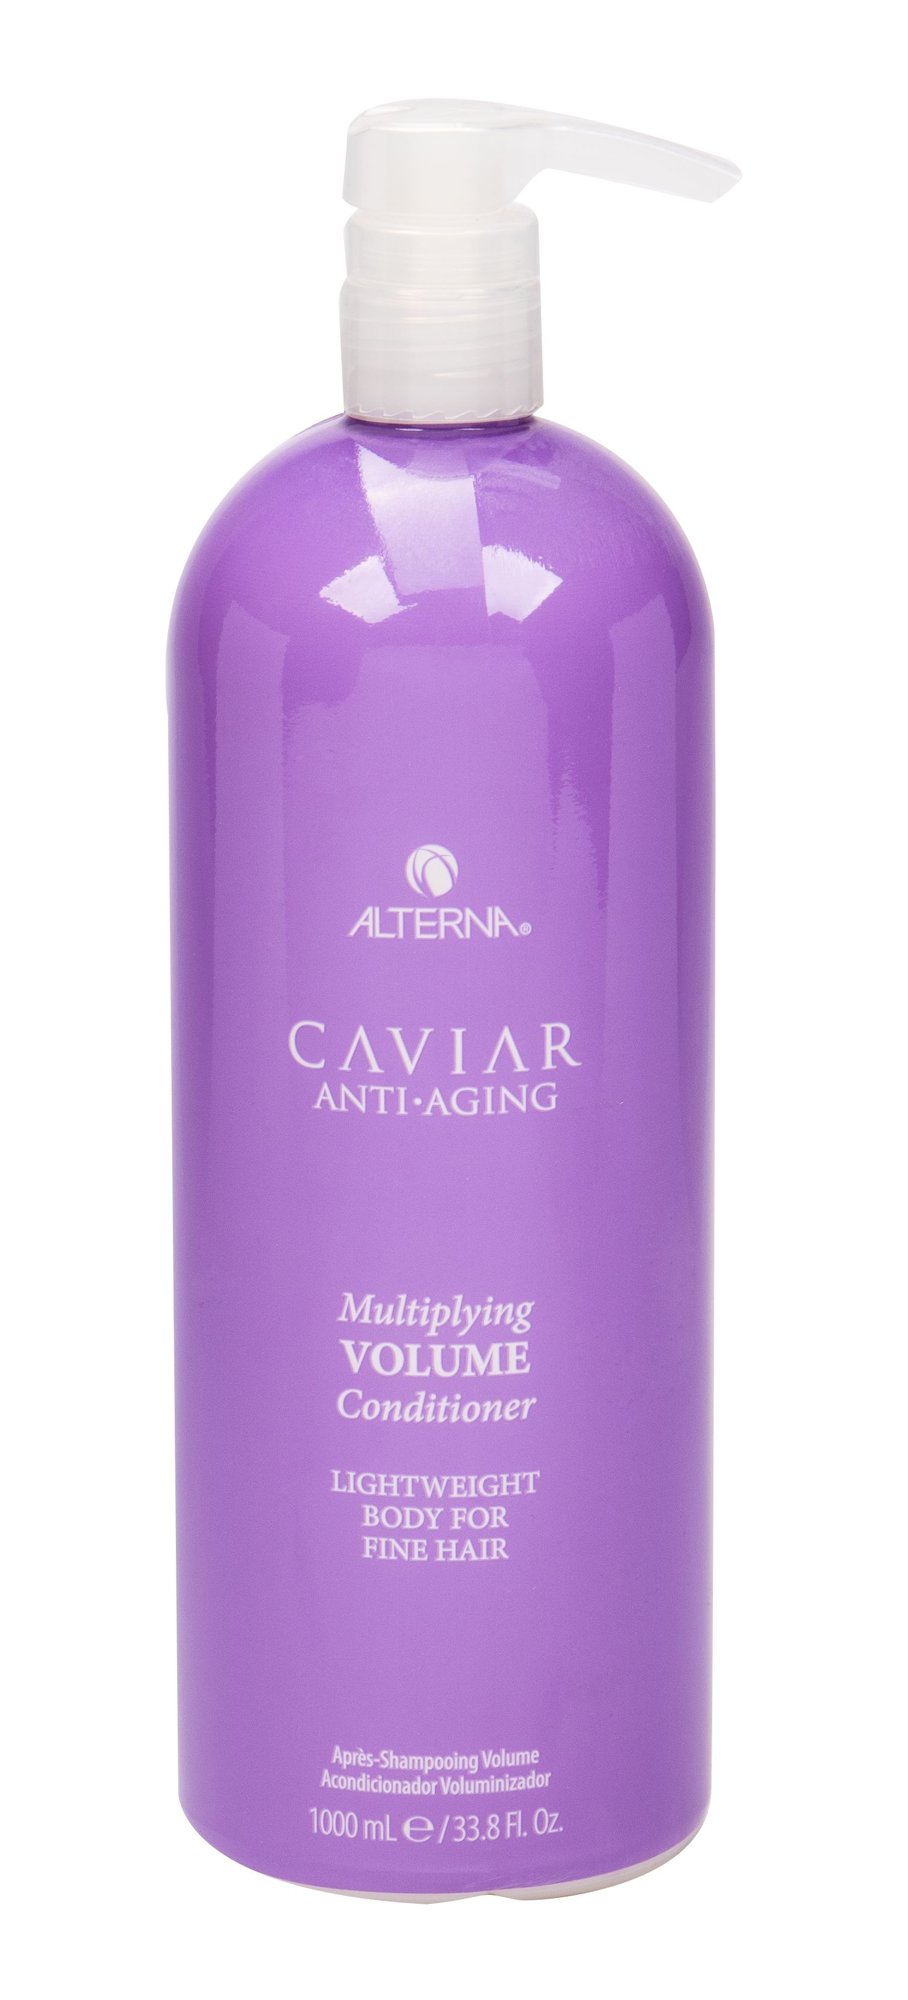 Alterna Caviar Anti-Aging Multiplying Volume 1000ml kondicionierius